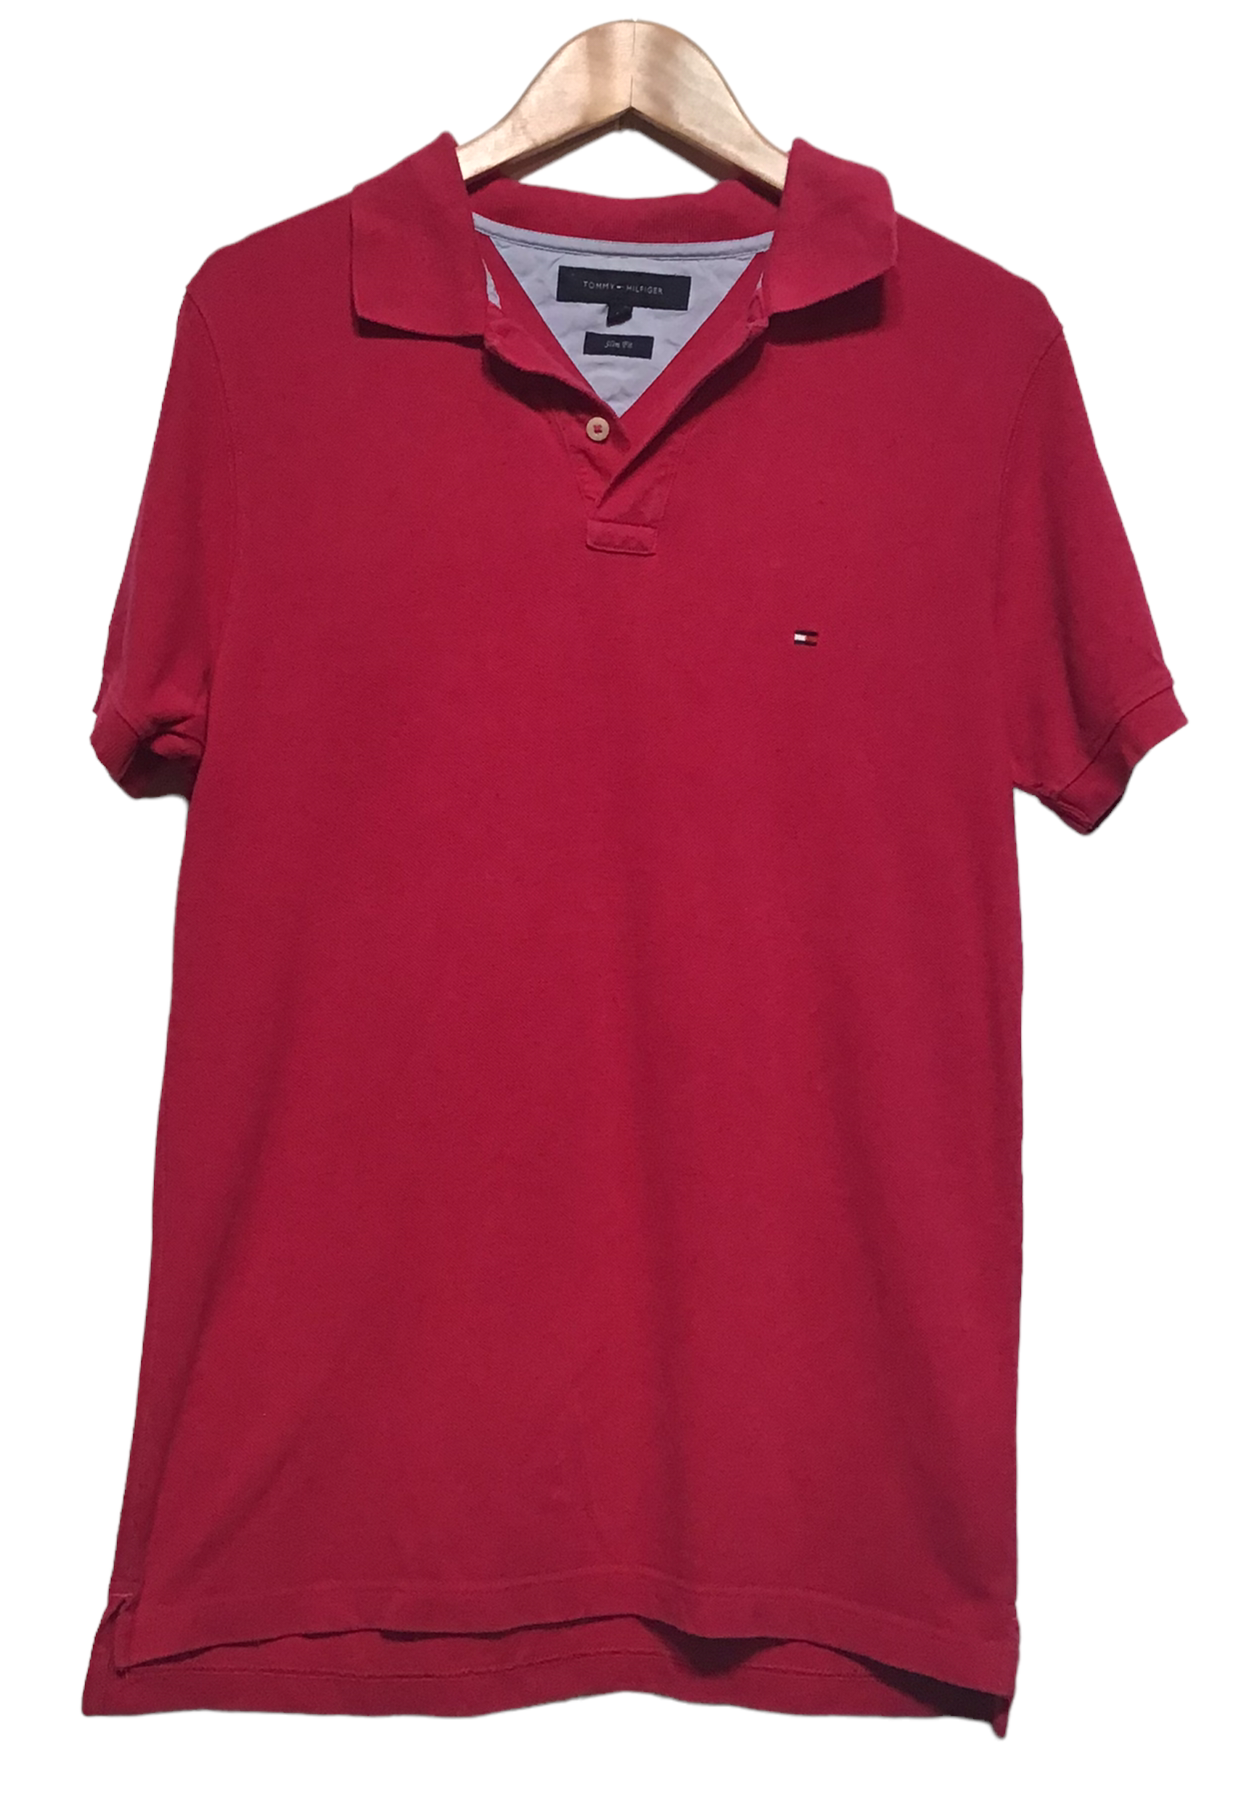 Tommy Hilfiger Polo Shirt (Size M)